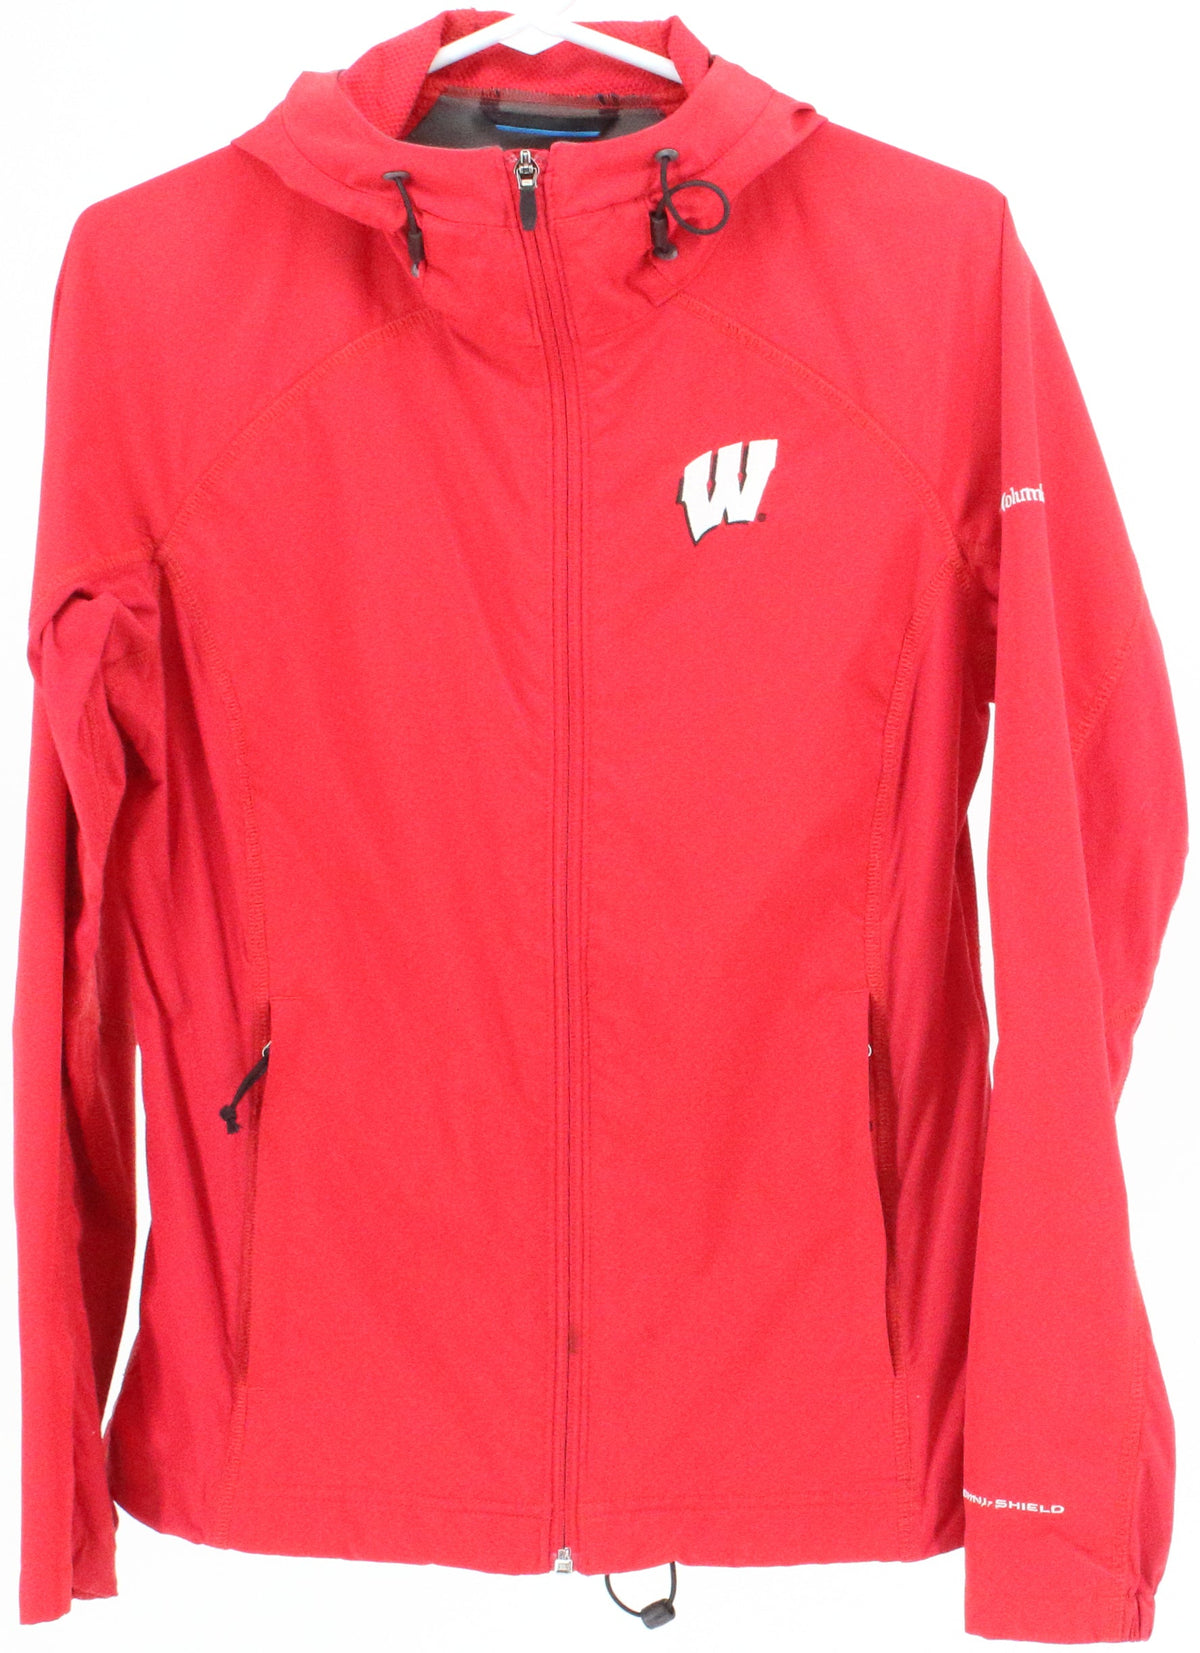 Columbia Wisconsin Red Hooded Women's Jacket